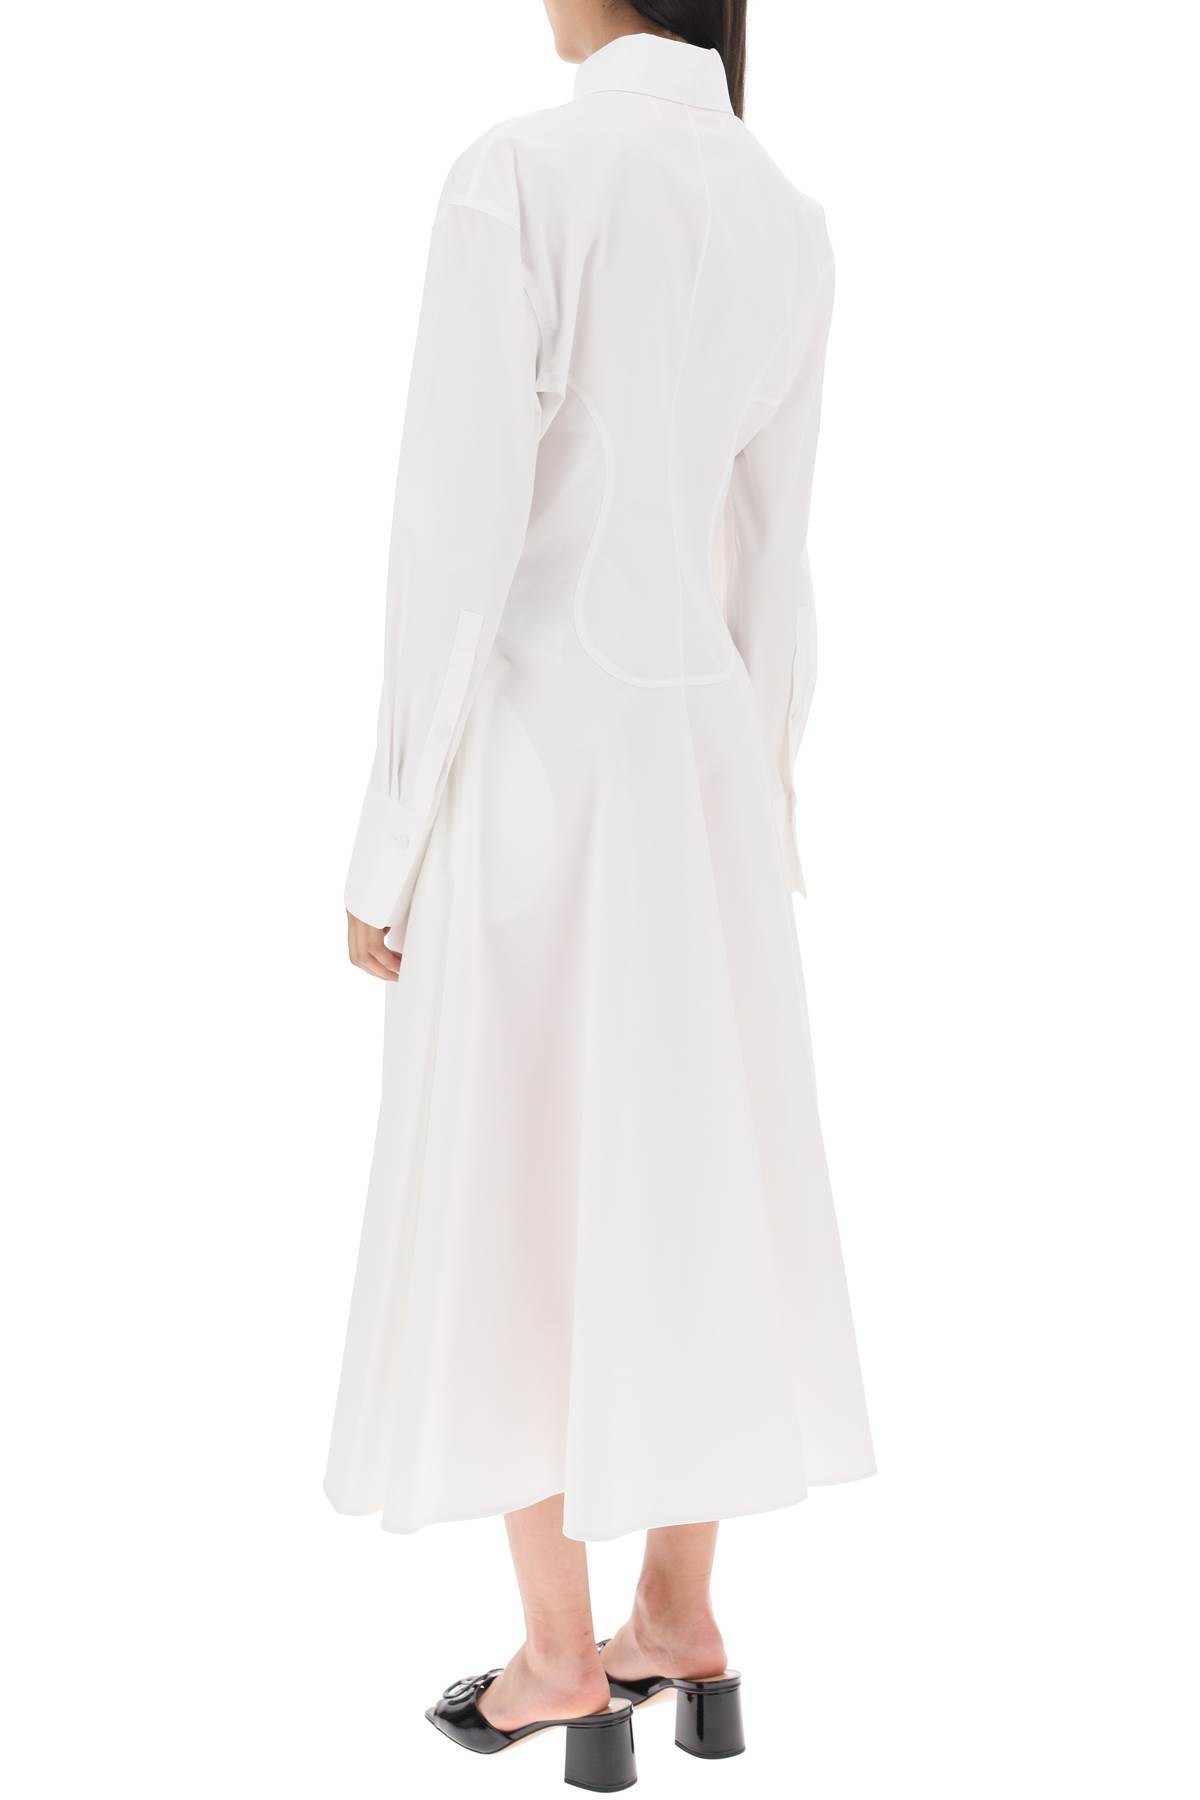 Shop Valentino Compact Poplin Midi Dress With Rose In White